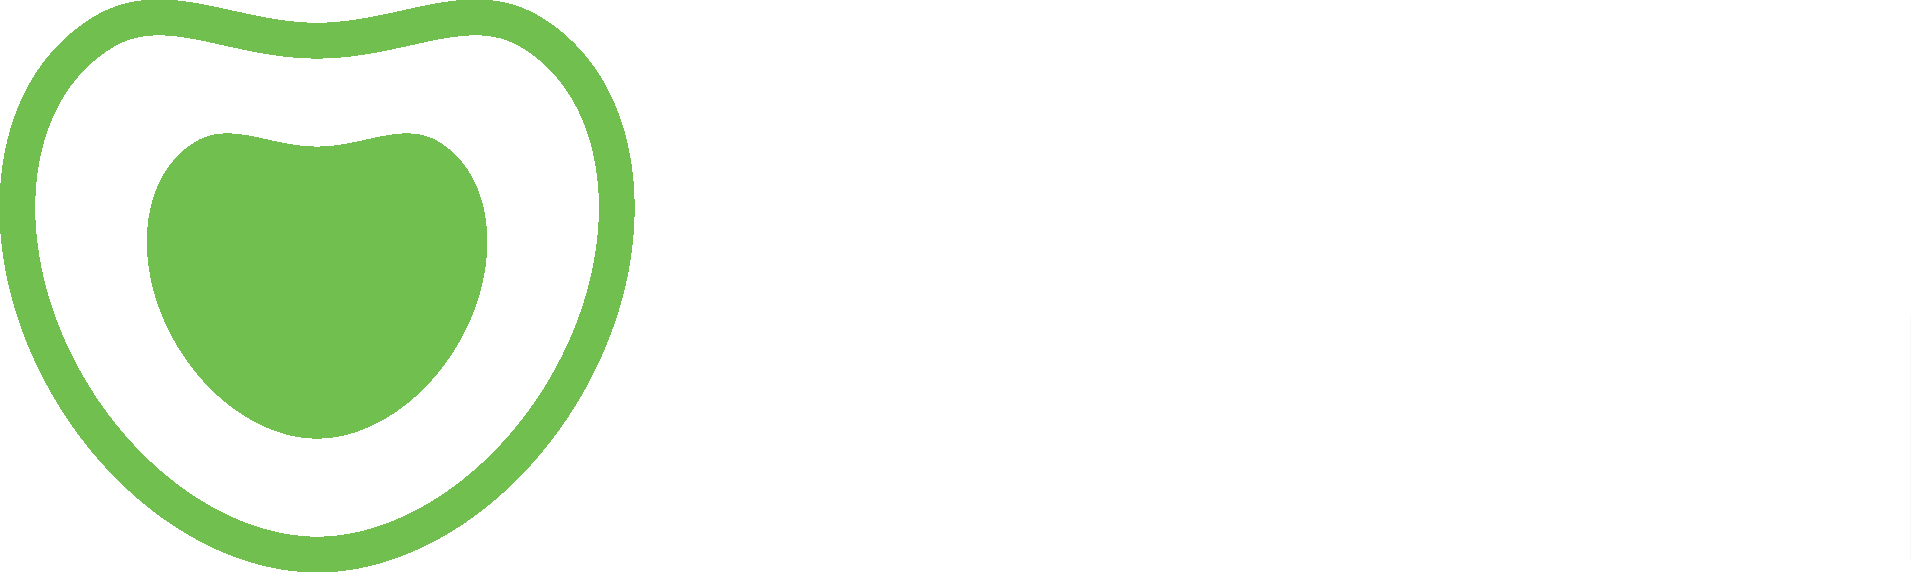 logo_lean_health-1 - Copia (2)